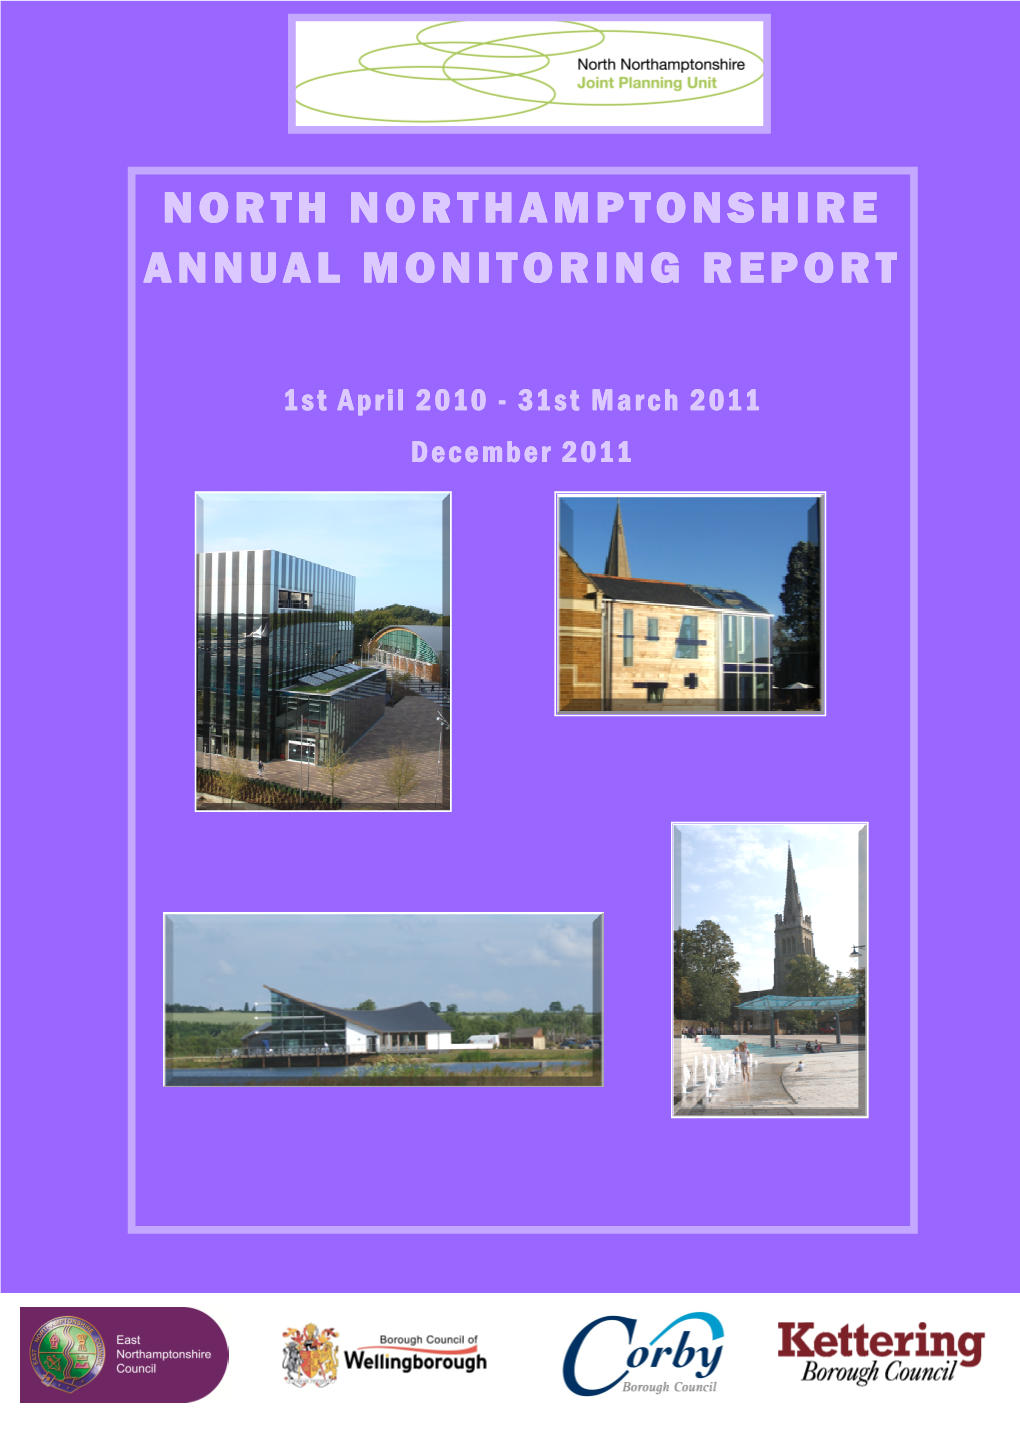 North Northamptonshire Annual Monitoring Report Annual Monitoring Report